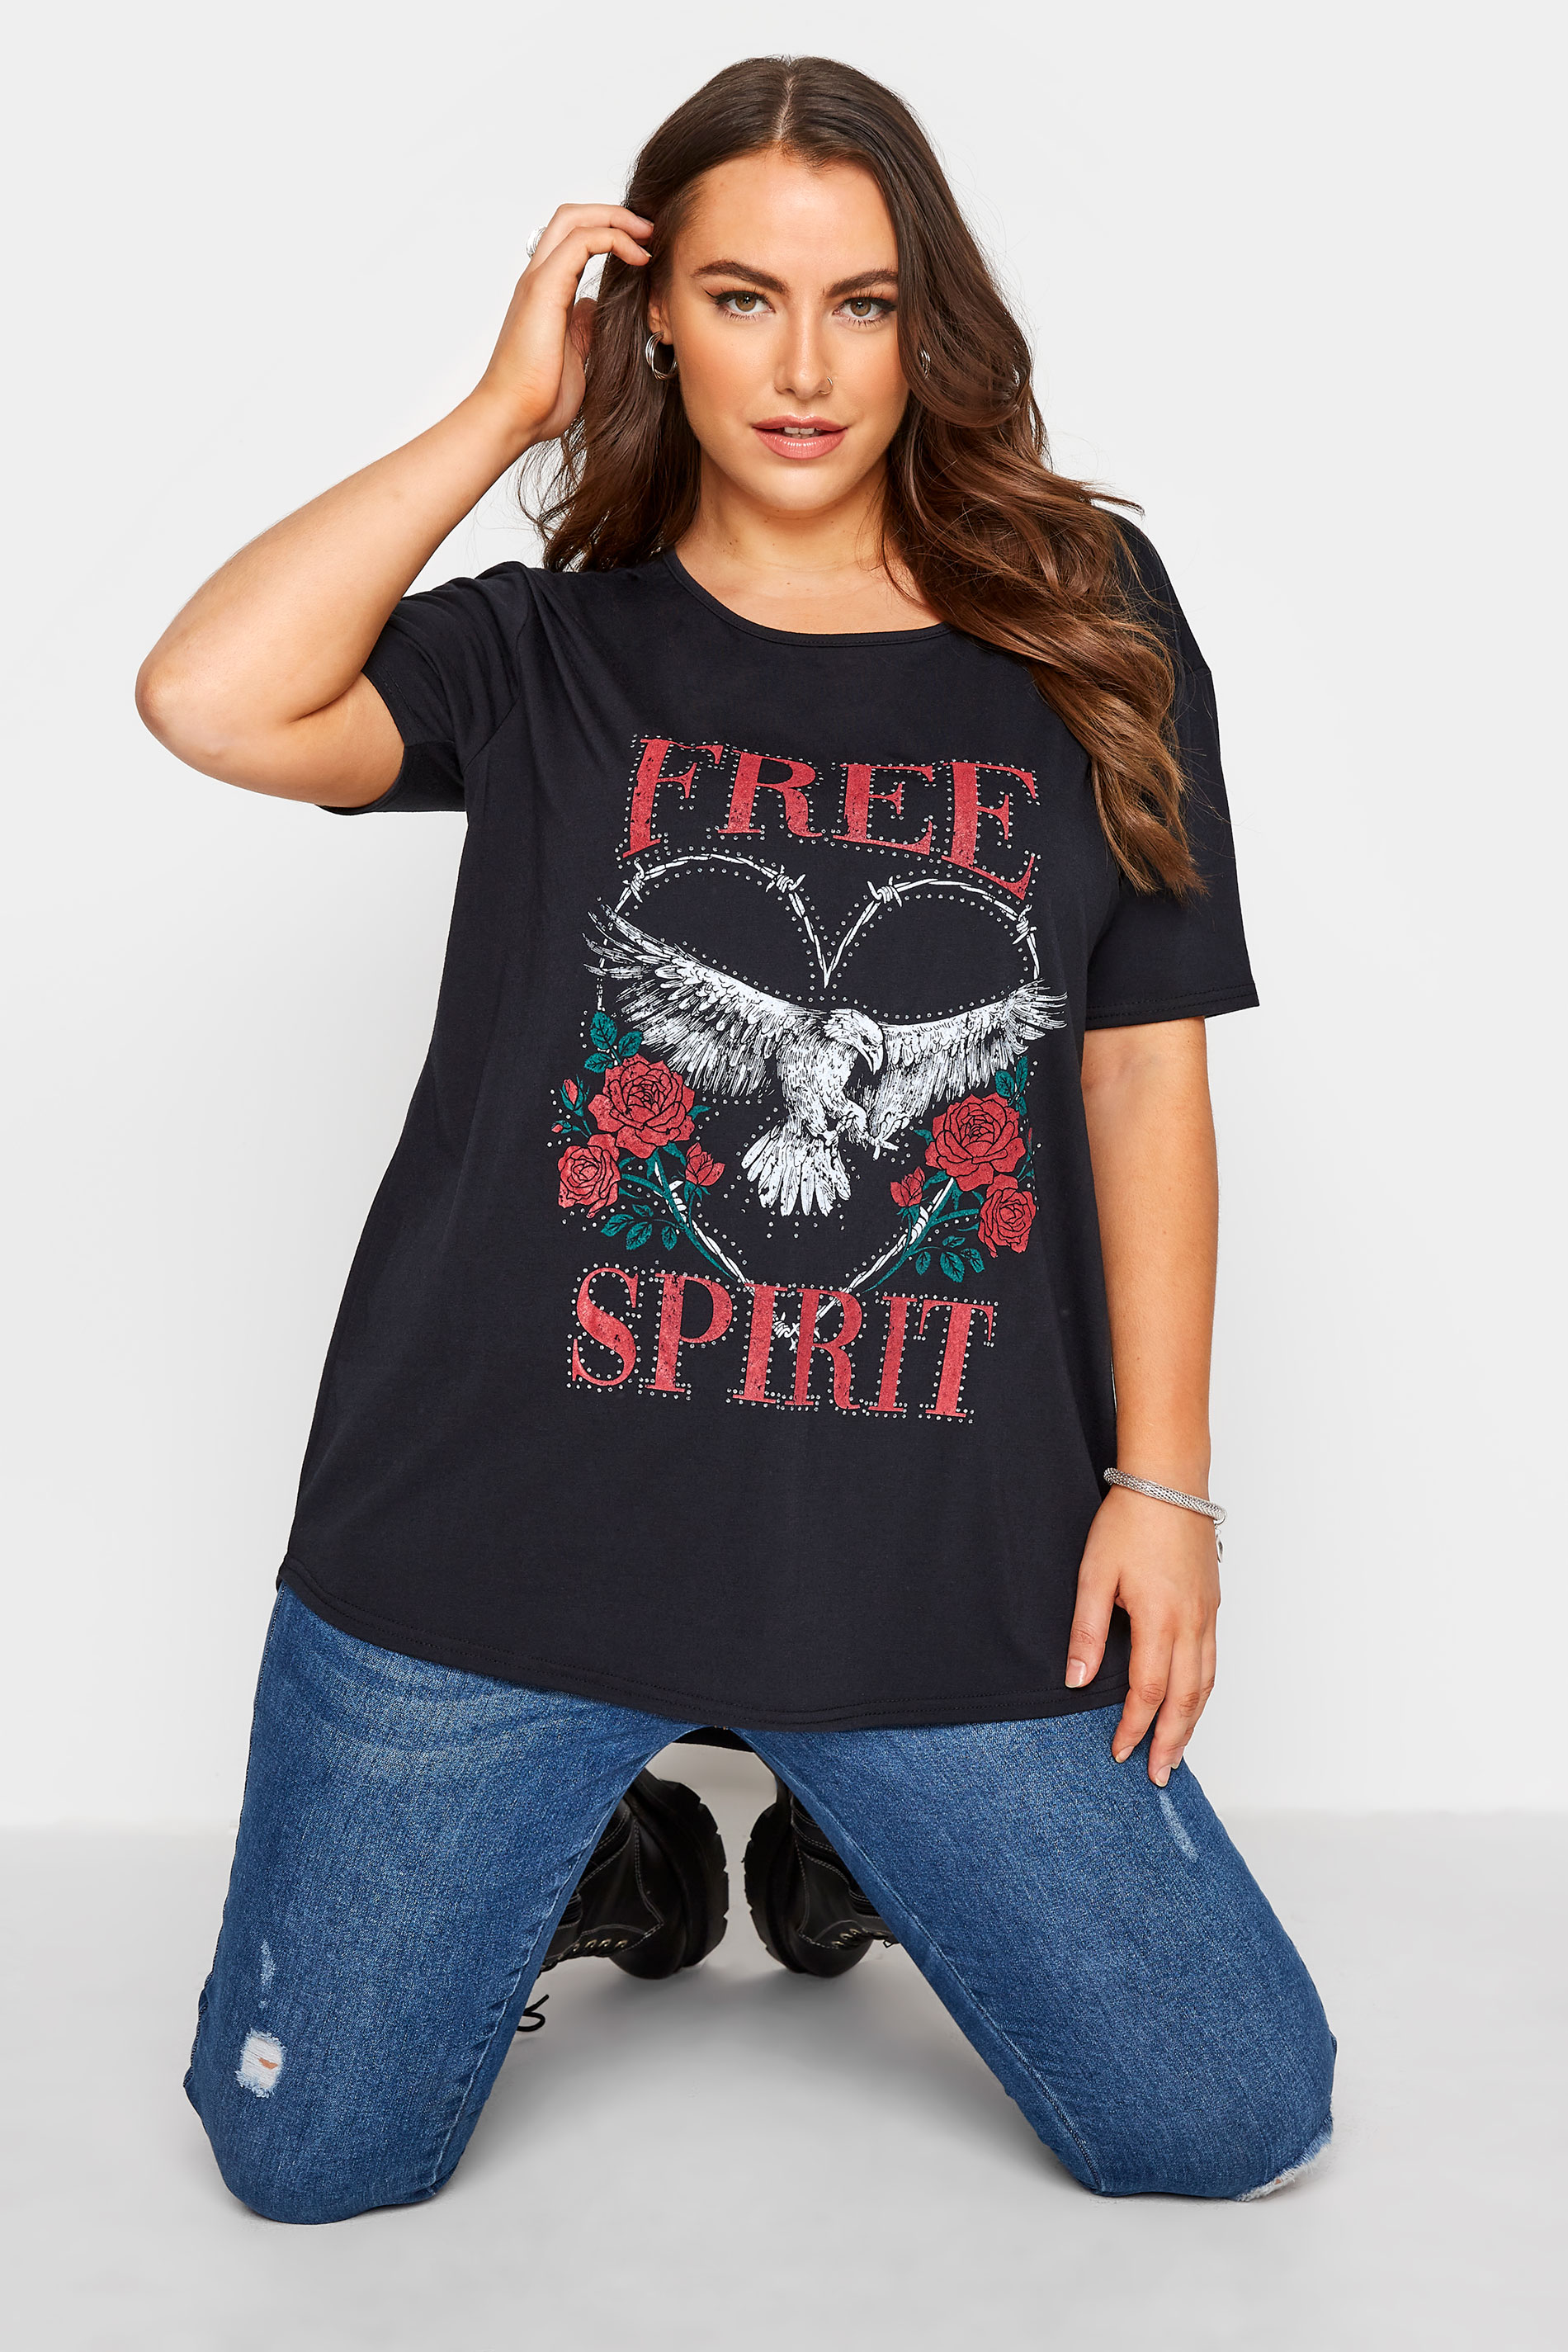 Black Eagle 'Free Spirit' Slogan T-Shirt_A.jpg